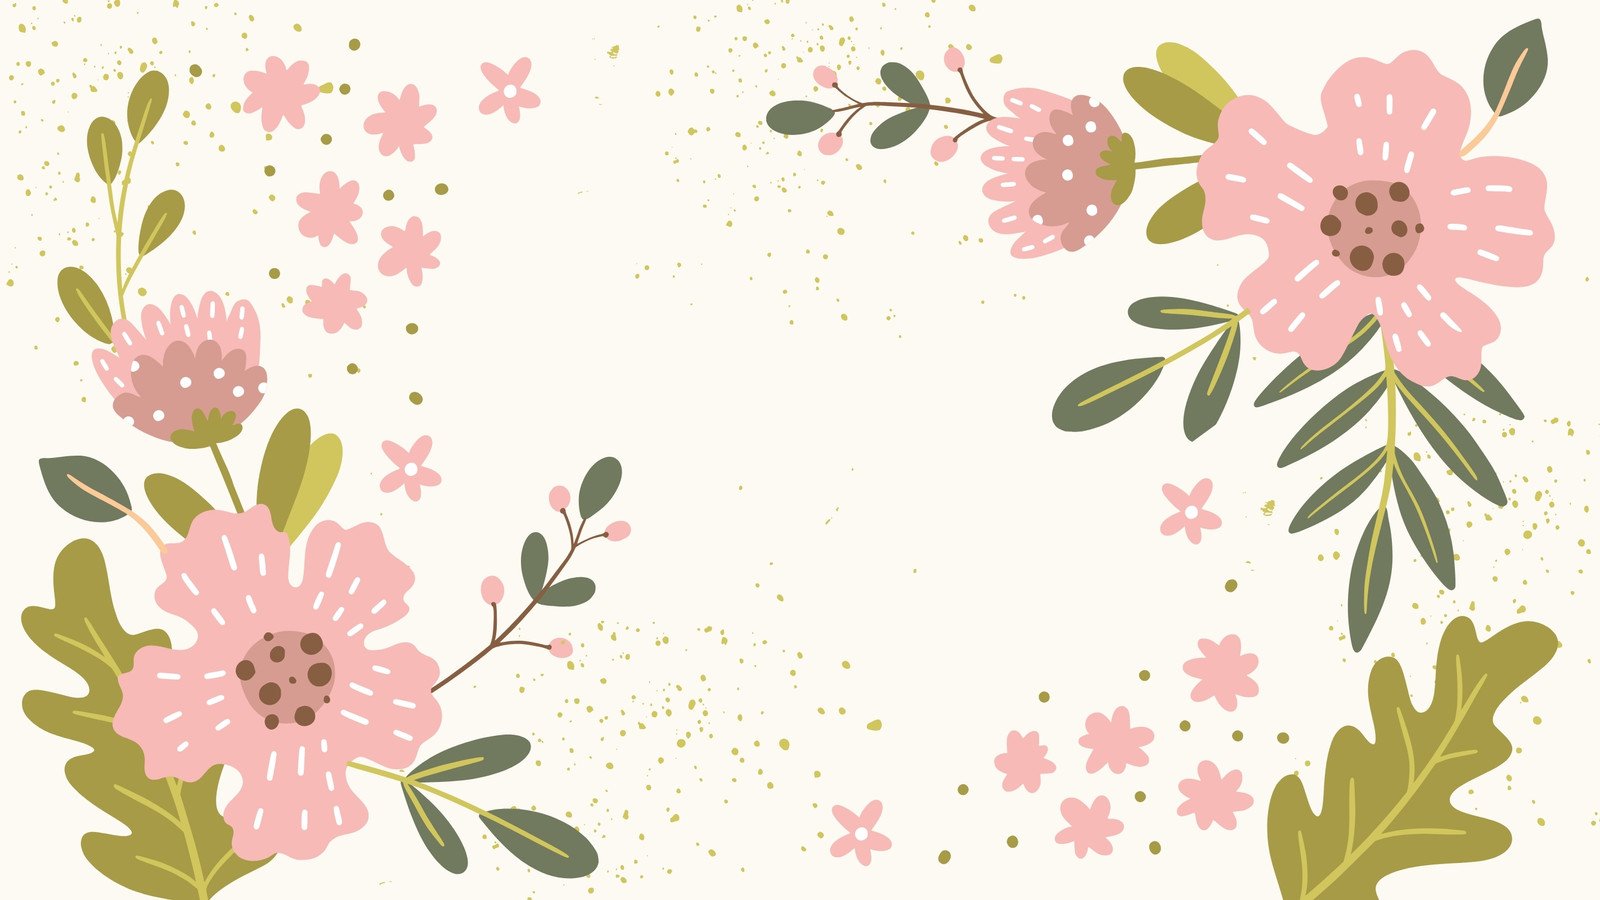 Free and customizable spring desktop wallpaper templates | Canva